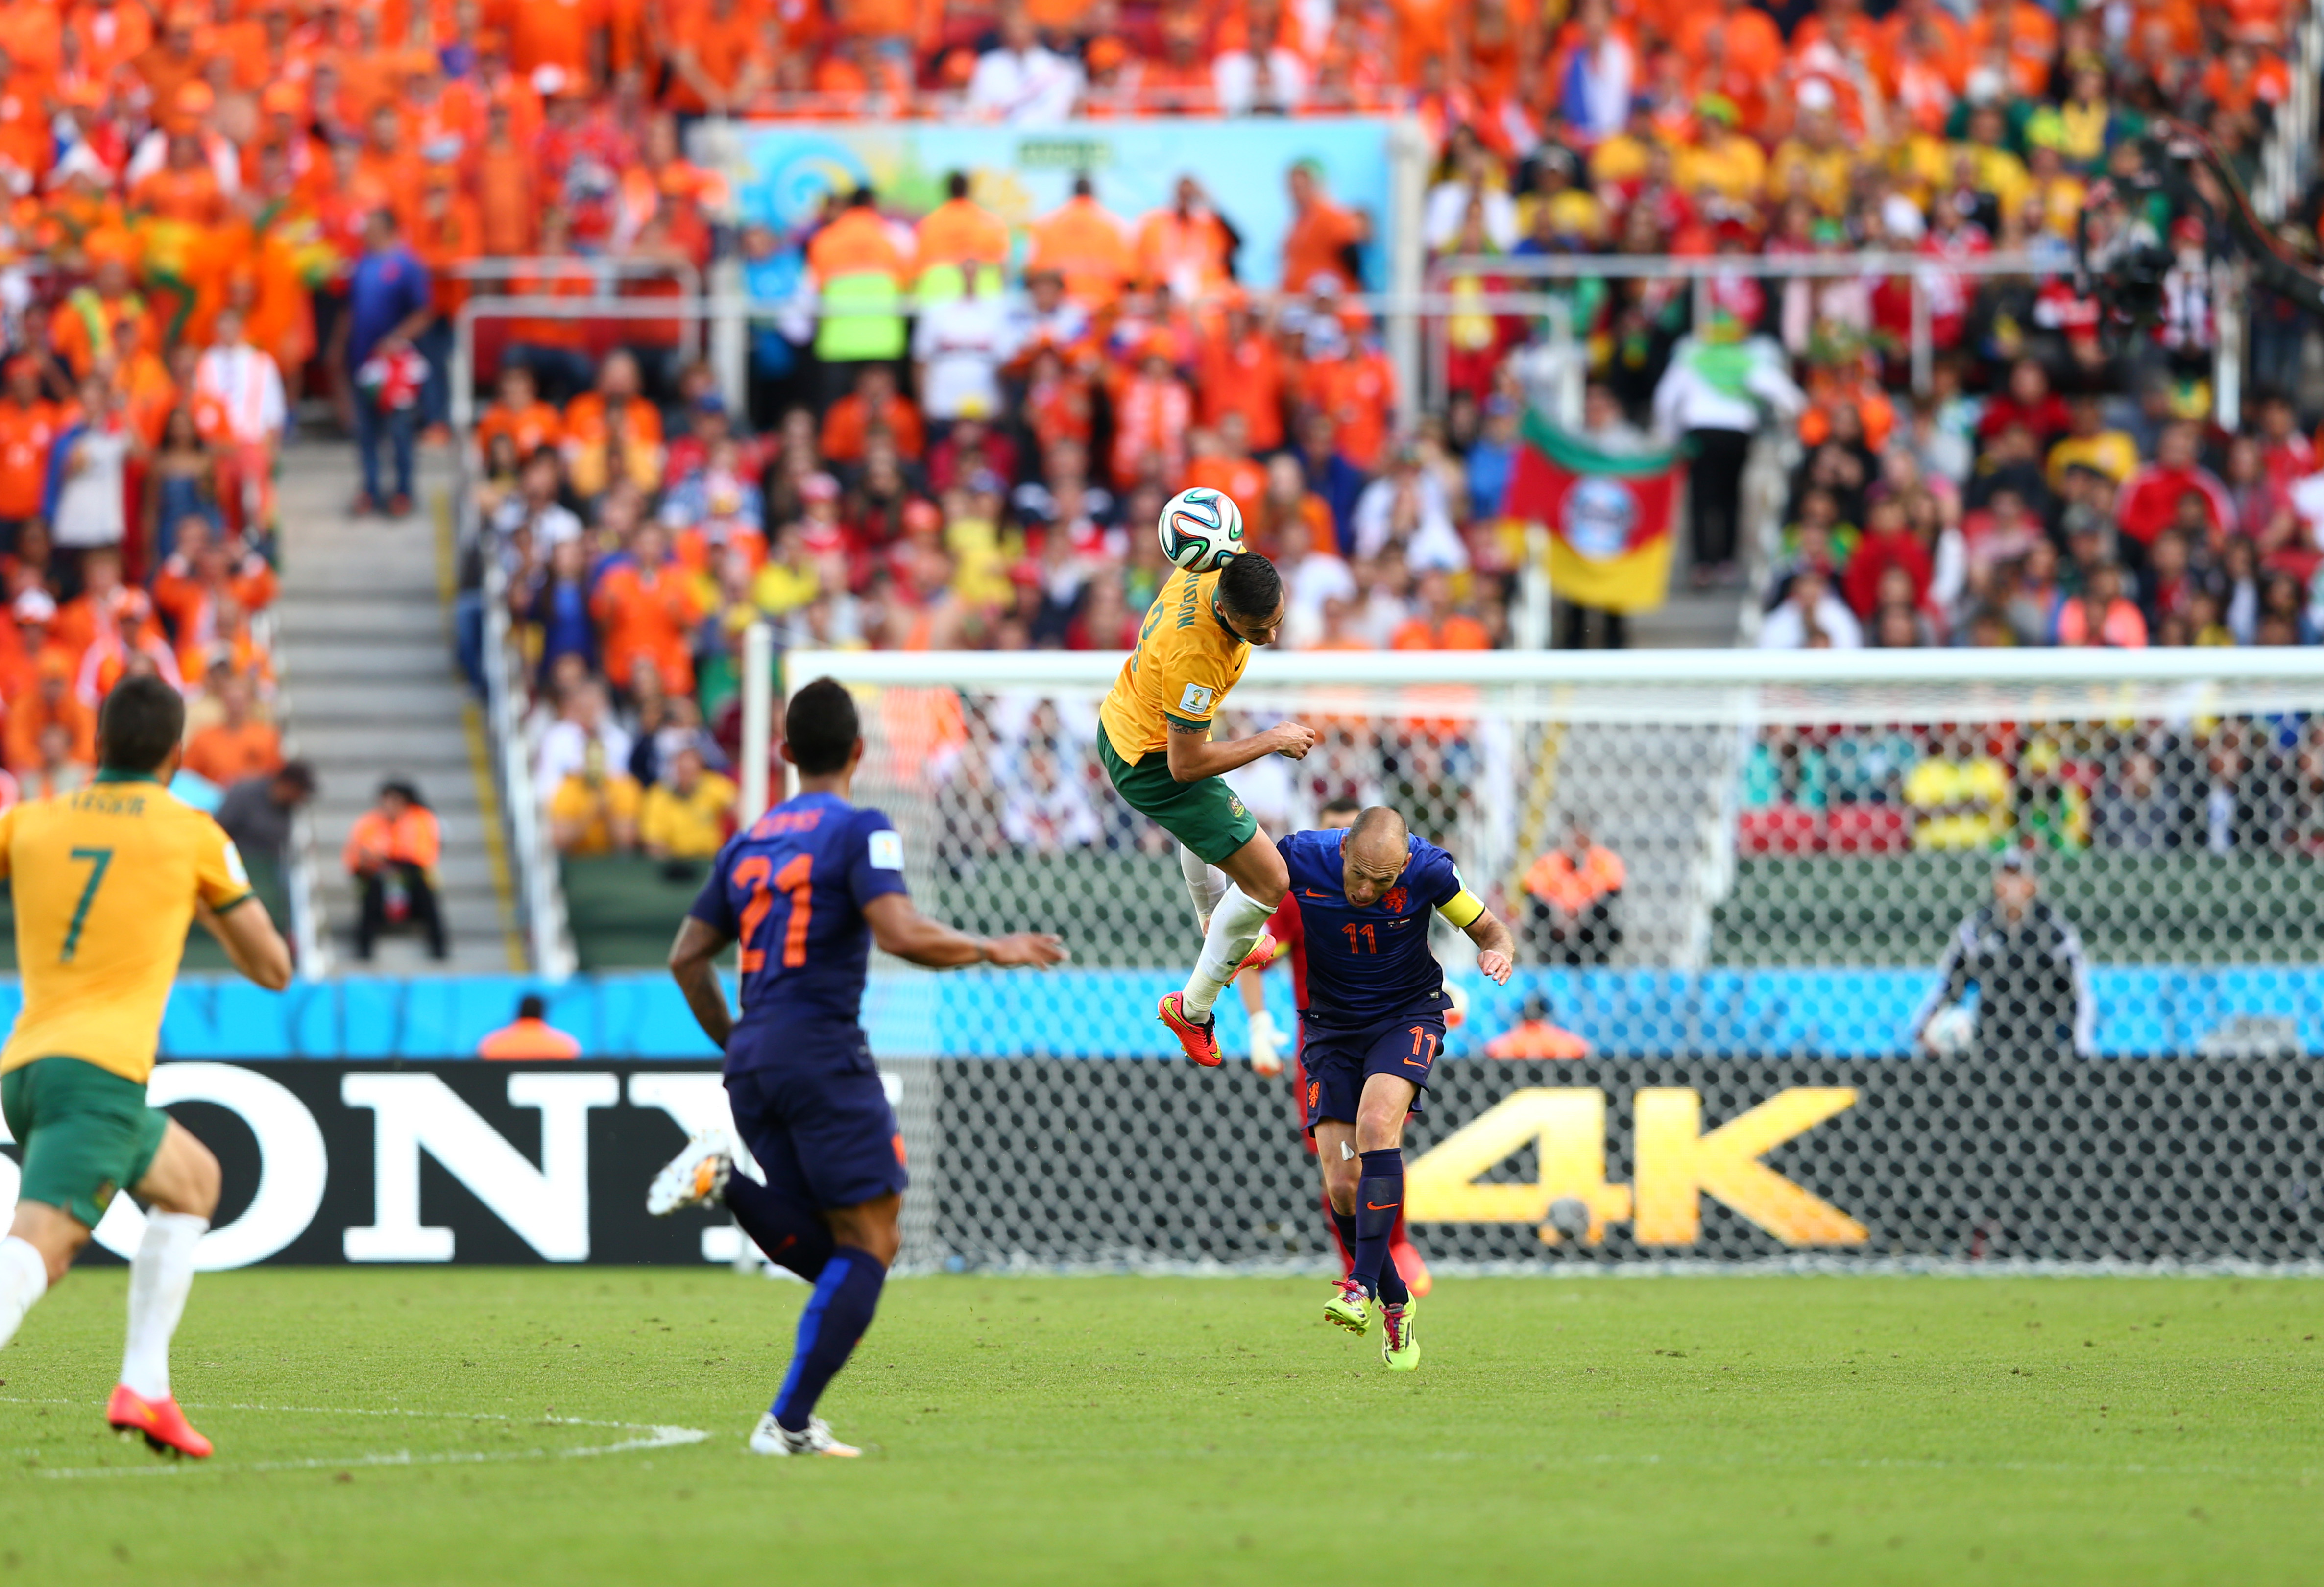 2014 World Cup Photos - Netherlands vs Australia | World Cup